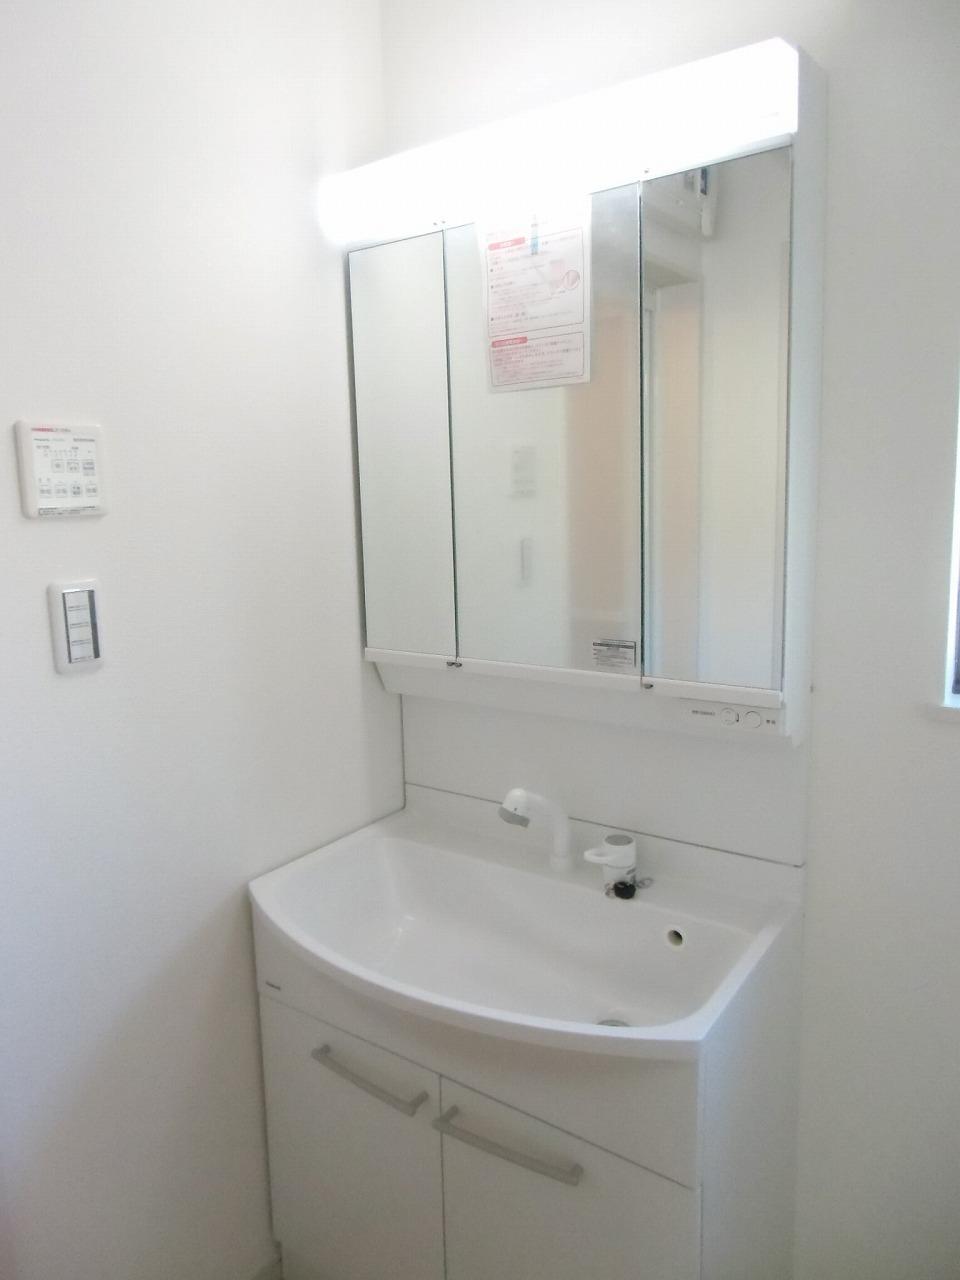 Wash basin, toilet. (2013.11.8) Shooting 1 Building